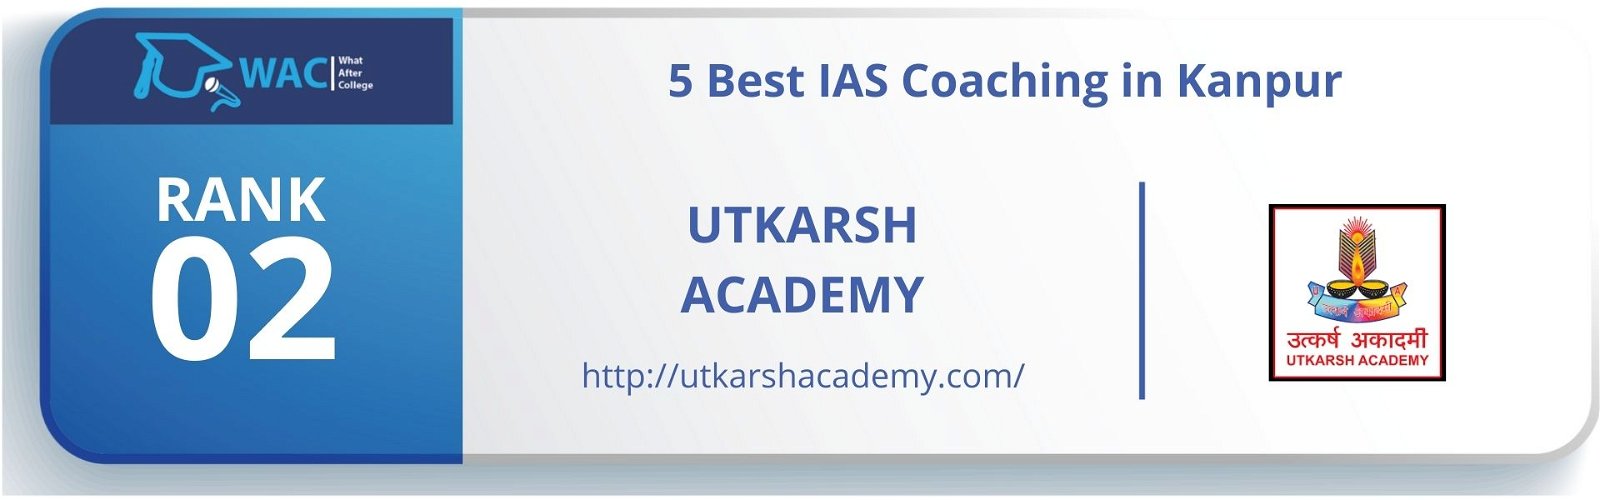 5Best IAS Coaching In Kanpur Rank 2: Utkarsh Academy in Kanpur